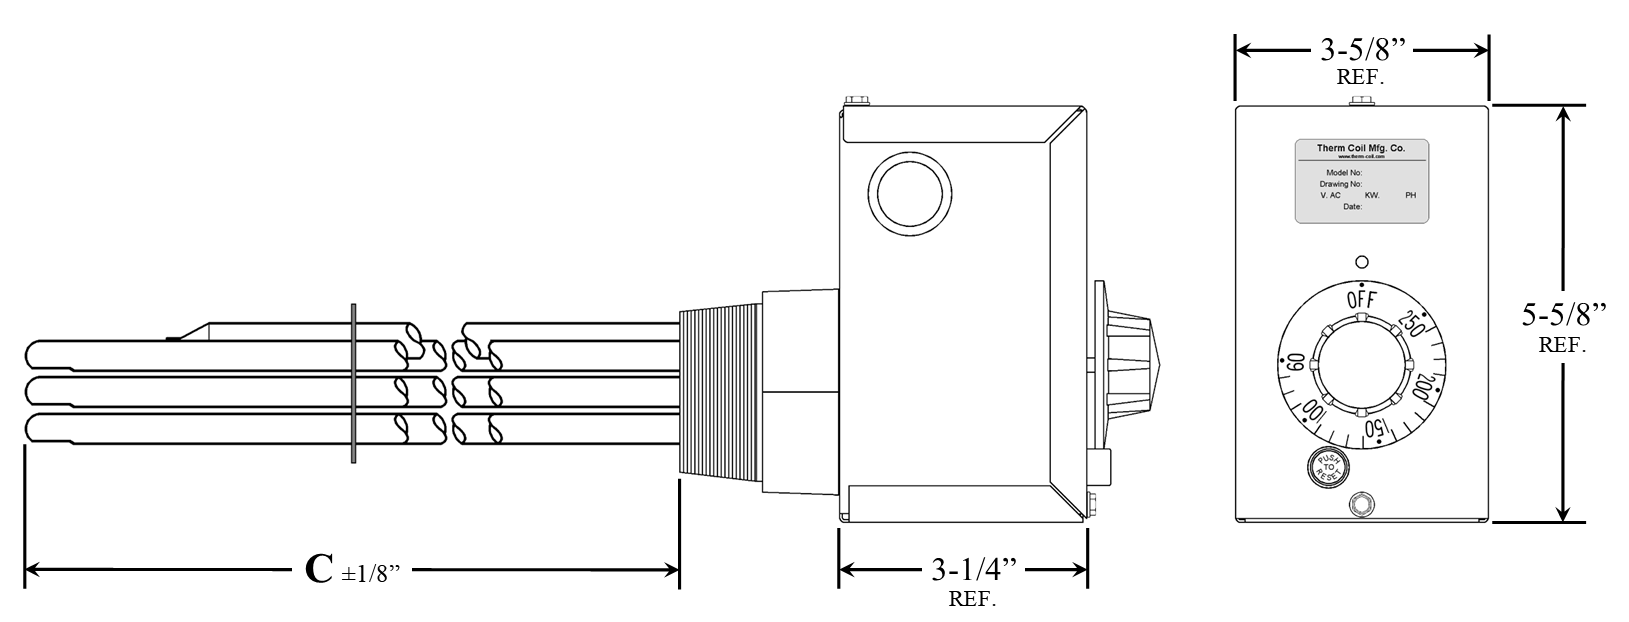 HA-5021 Model: 5000W @ 208V 1-Phase, 13" Immersion Length Regulated 2" NPT Commercial Dishwasher Heating Elements